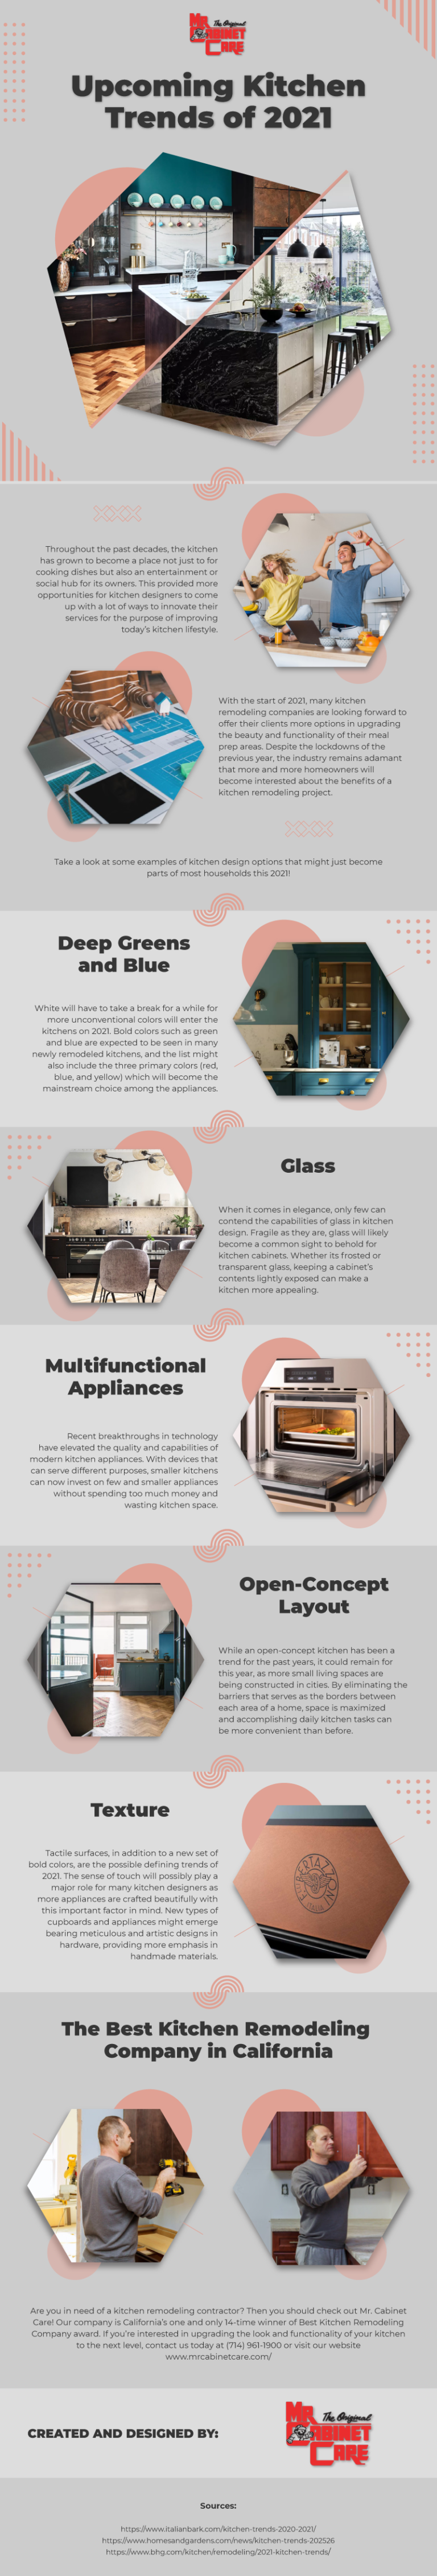 kitchen trends 2021 - infographic